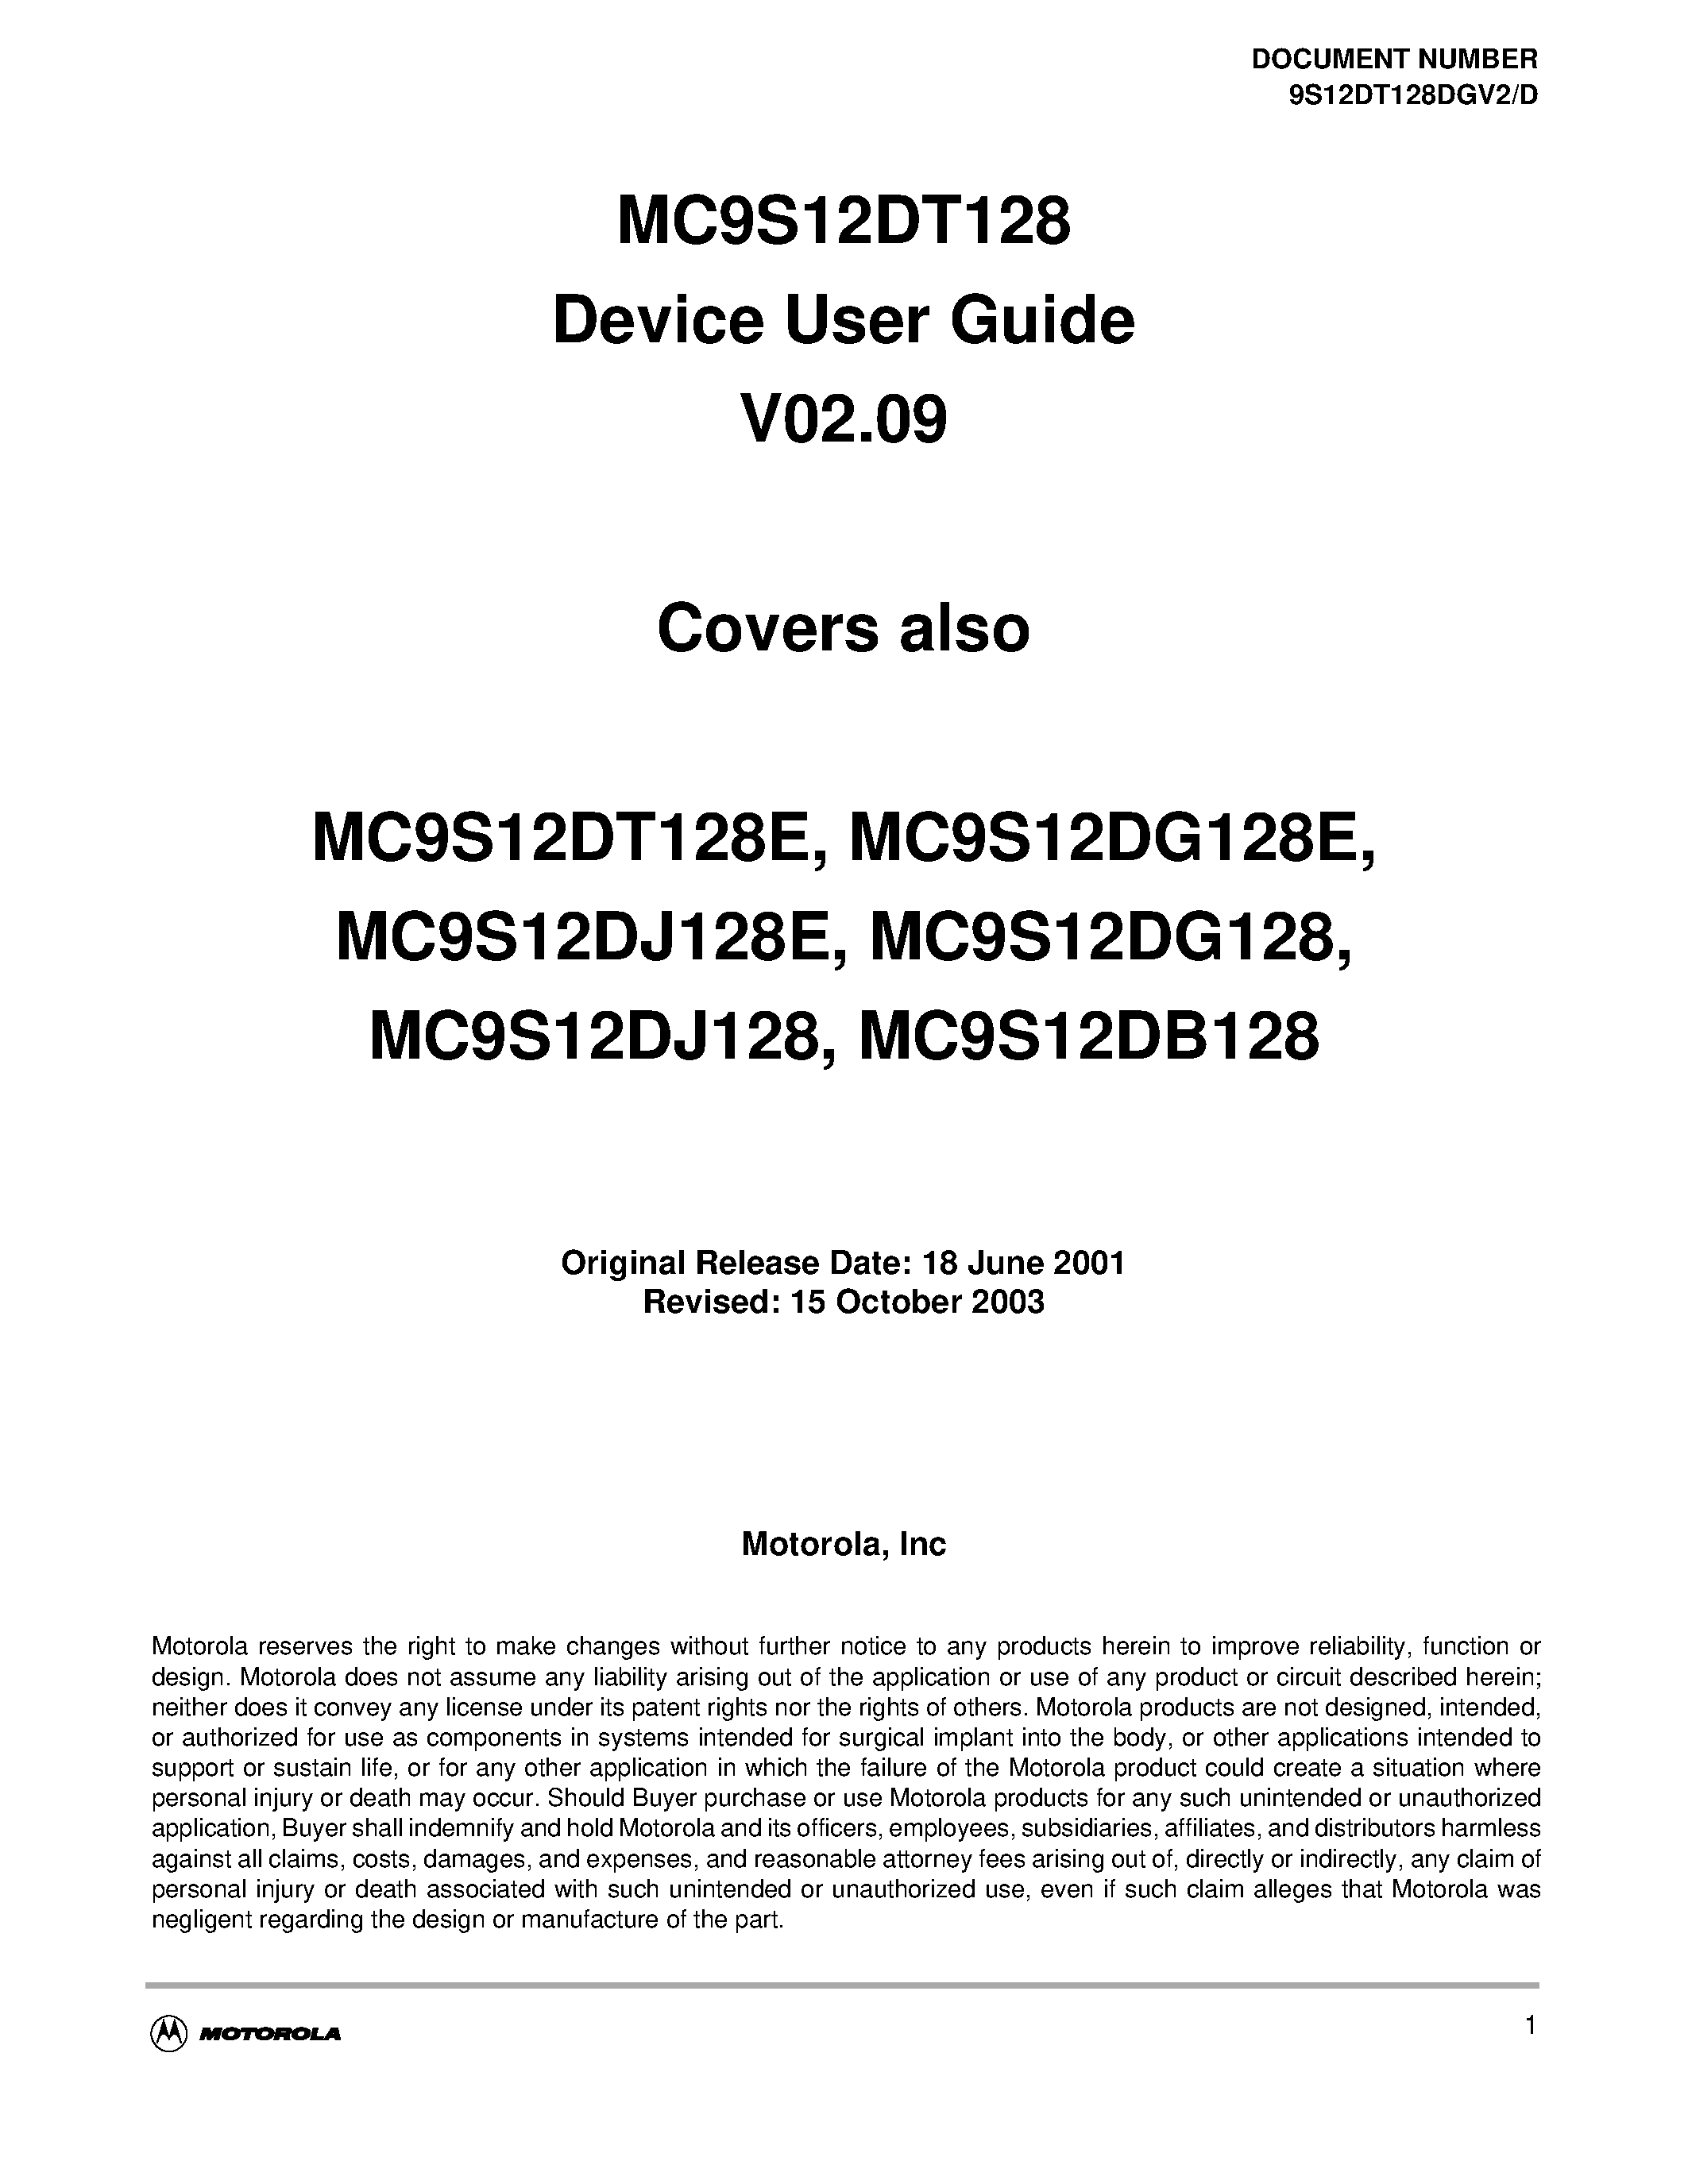 Даташит S12SCIV2D - MC9S12DT128 Device User Guide V02.09 страница 1